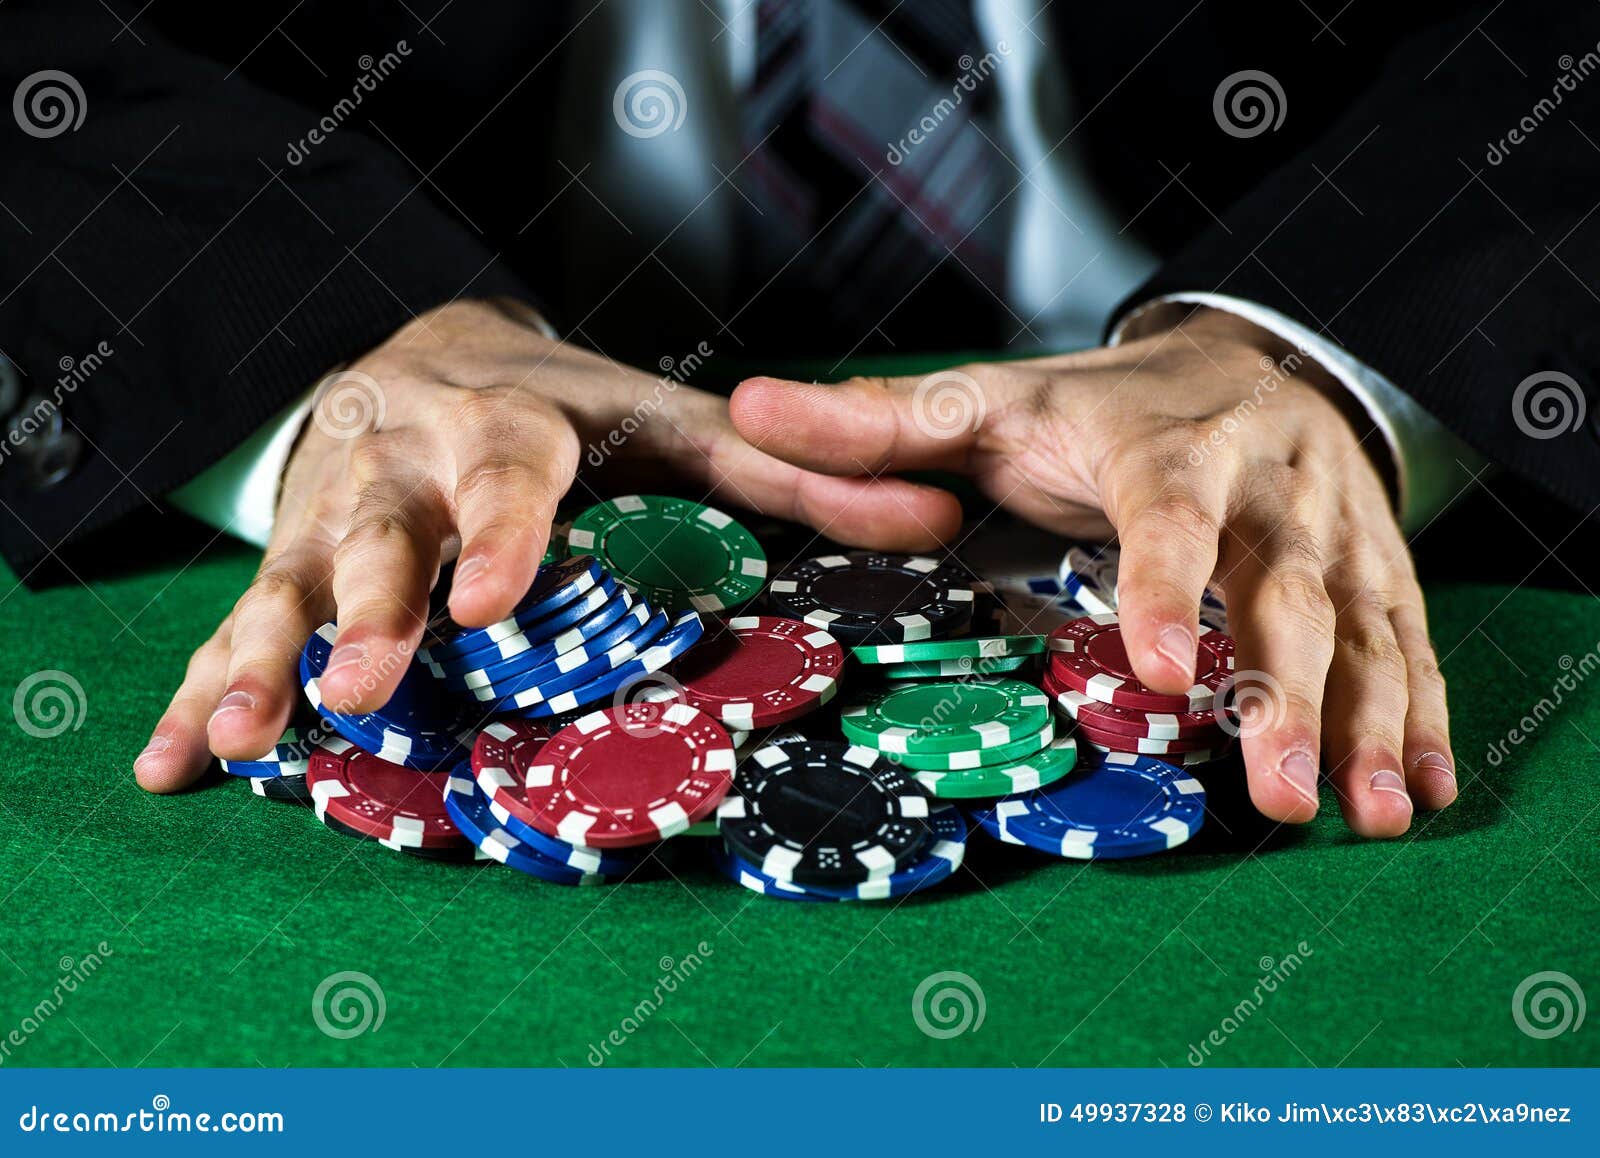 man betting on the casino